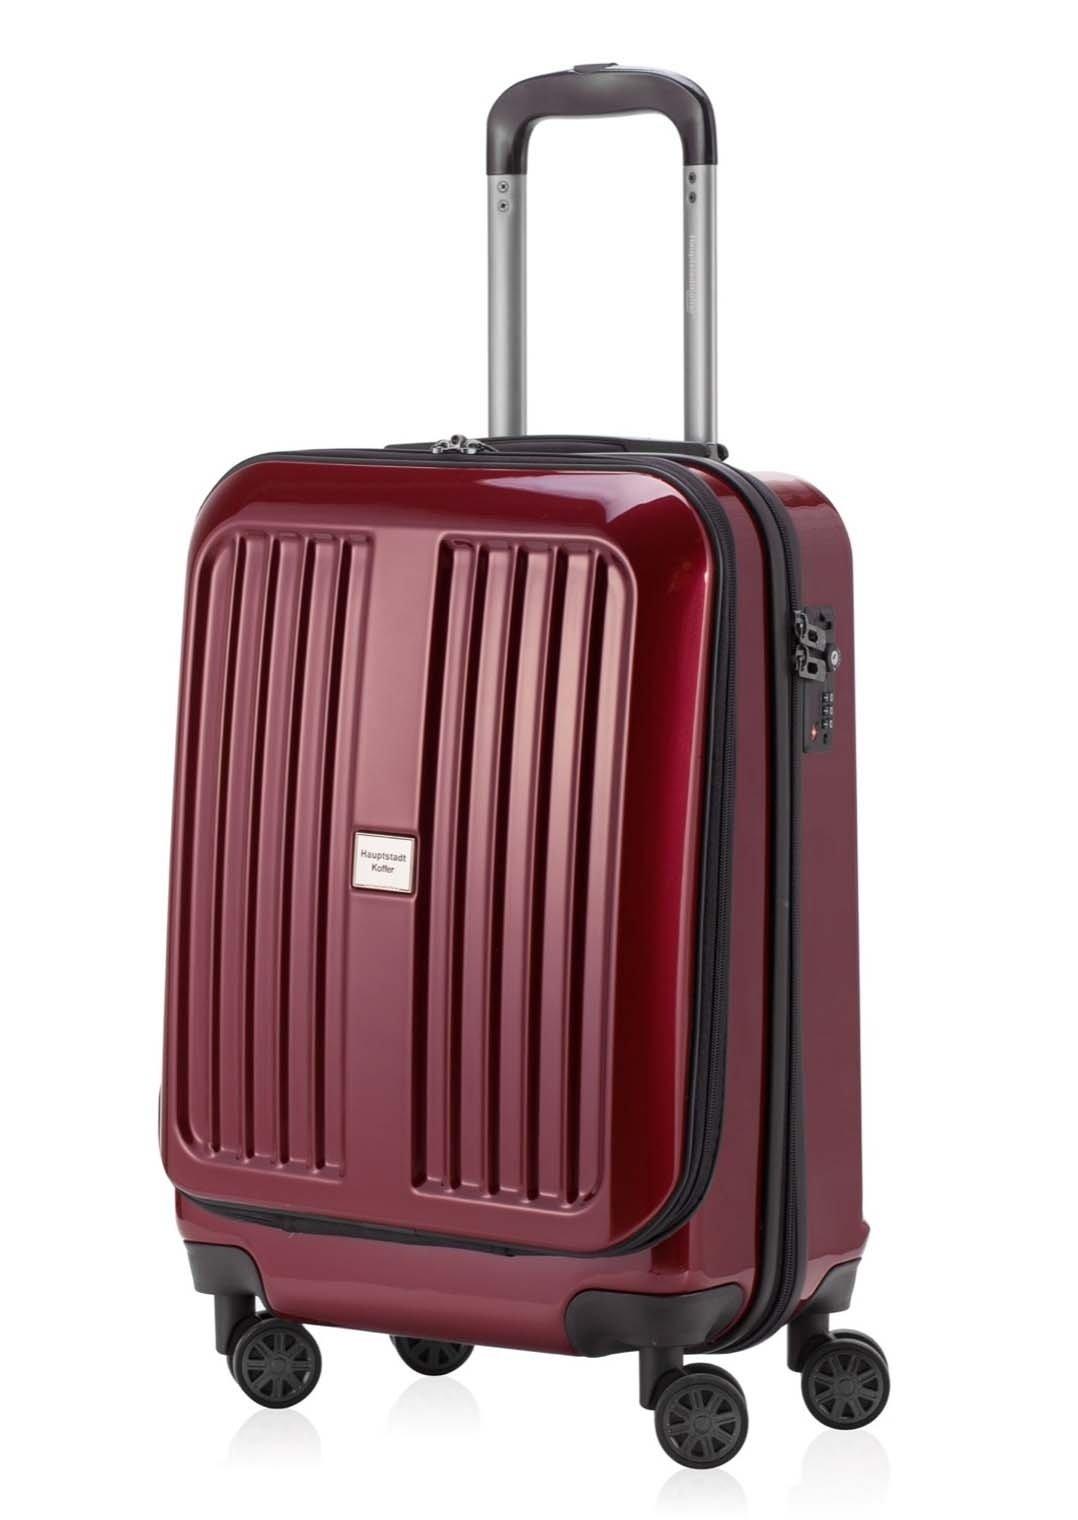 Hauptstadtkoffer ONE SIZE, X-Berg bagage à main rigide avec TSA surface mate bordeaux  